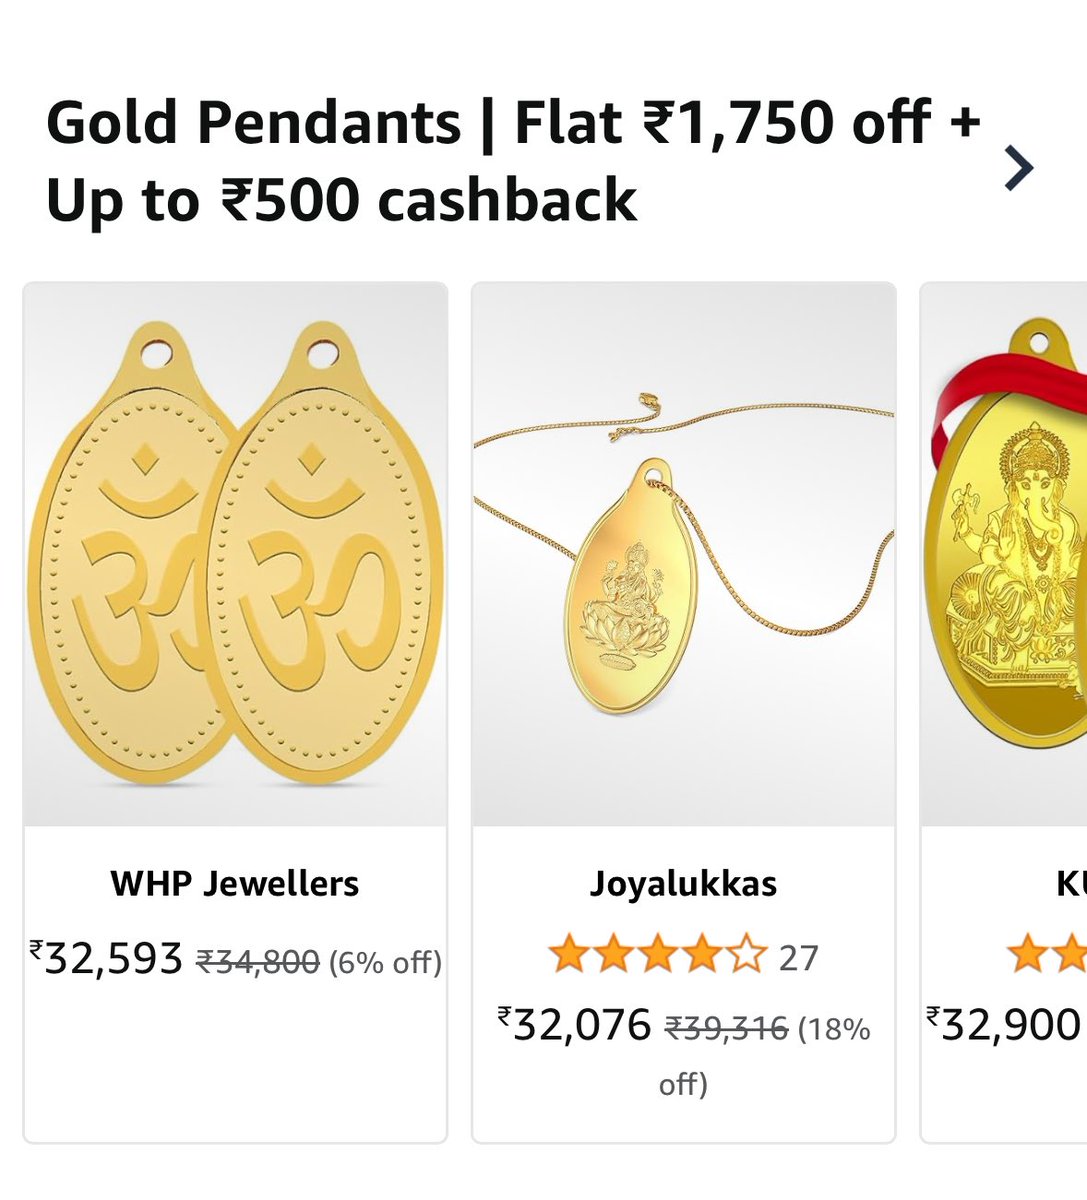 Gold deals ⭐️⭐️⭐️⭐️ 😍On 1 gram ₹1,250 off +₹200 cashback 😍On 2 grams ₹1,750 + ₹500 cashback ✅₹500 cashback: amazon.in/h/rewards/dp/a… ⭐️All gold deals: amazon.in/b?node=9695091…